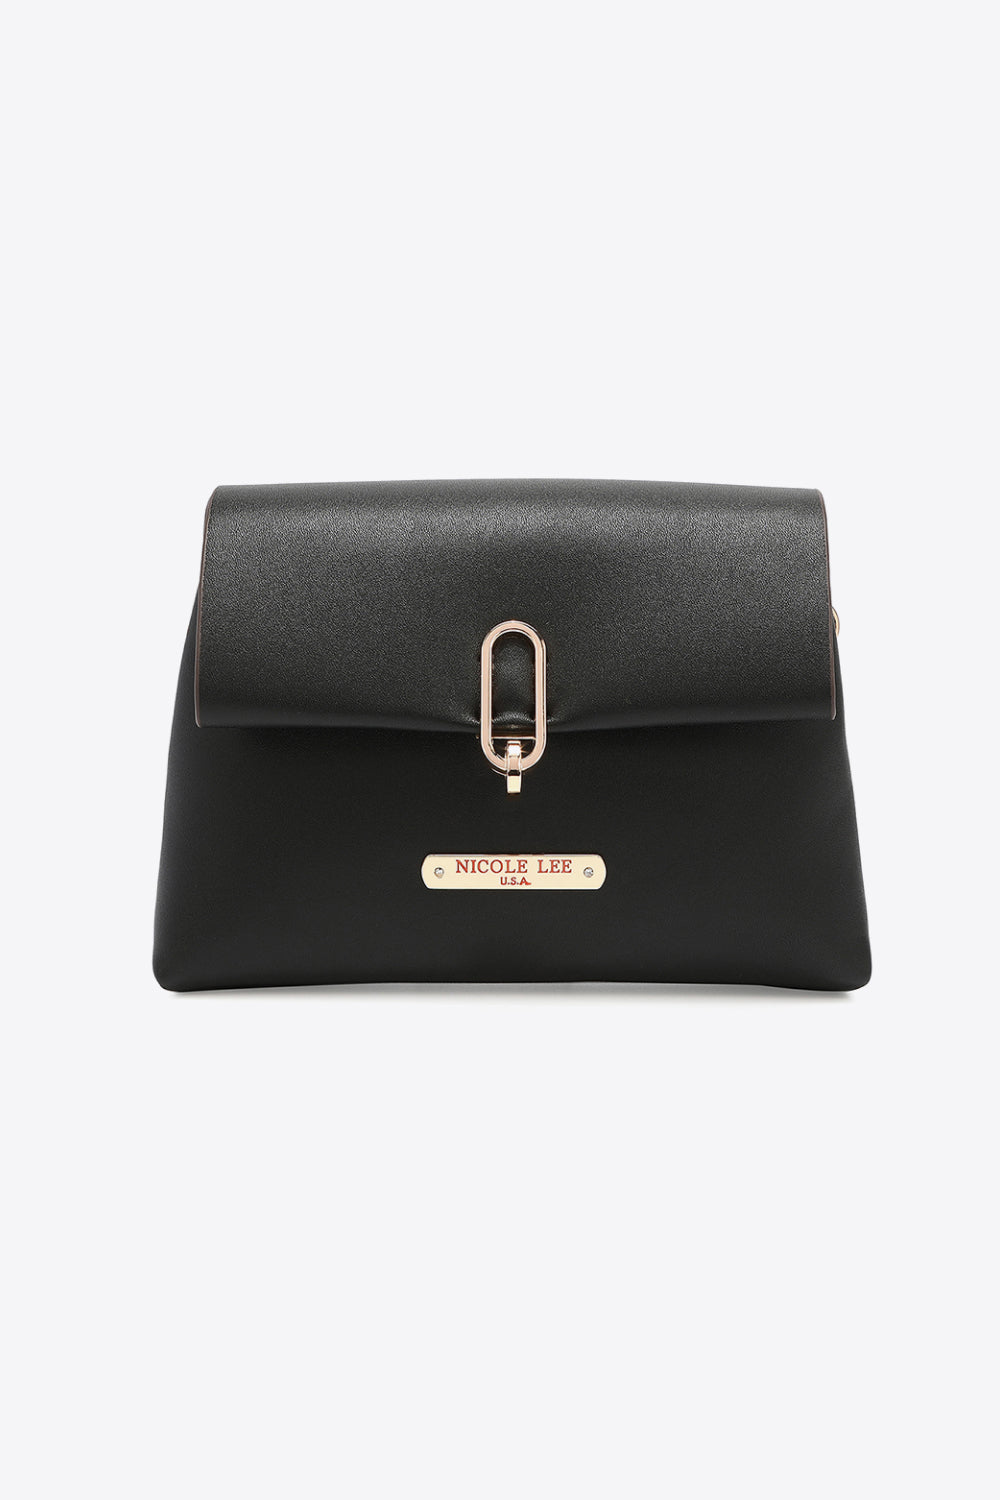 Nicole Lee USA Cassette Woven Satchel Crossbody Bag - Black / One Size